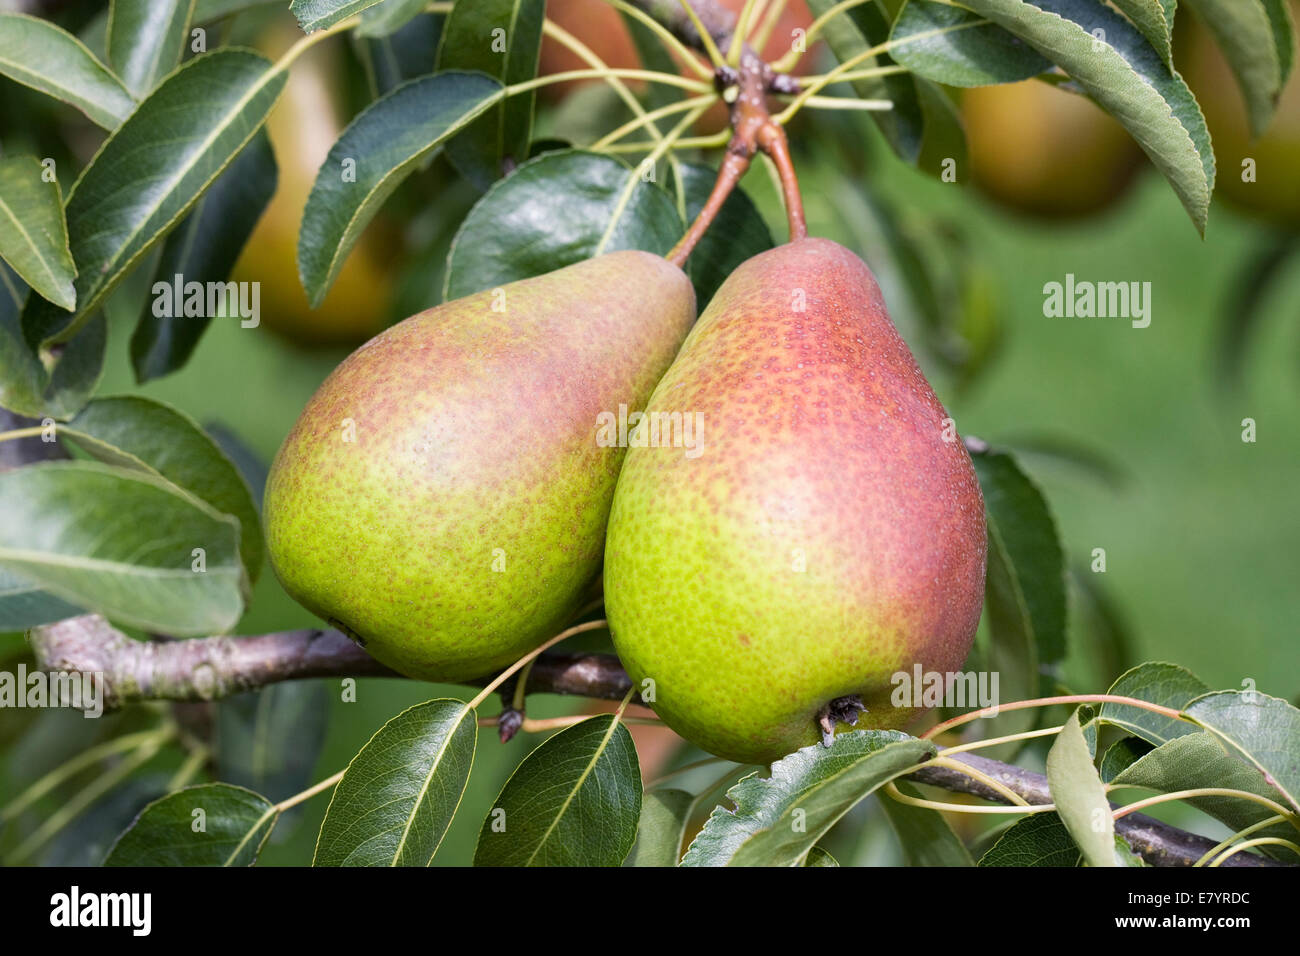 Organic Bartlett Pears, 1 ct - City Market